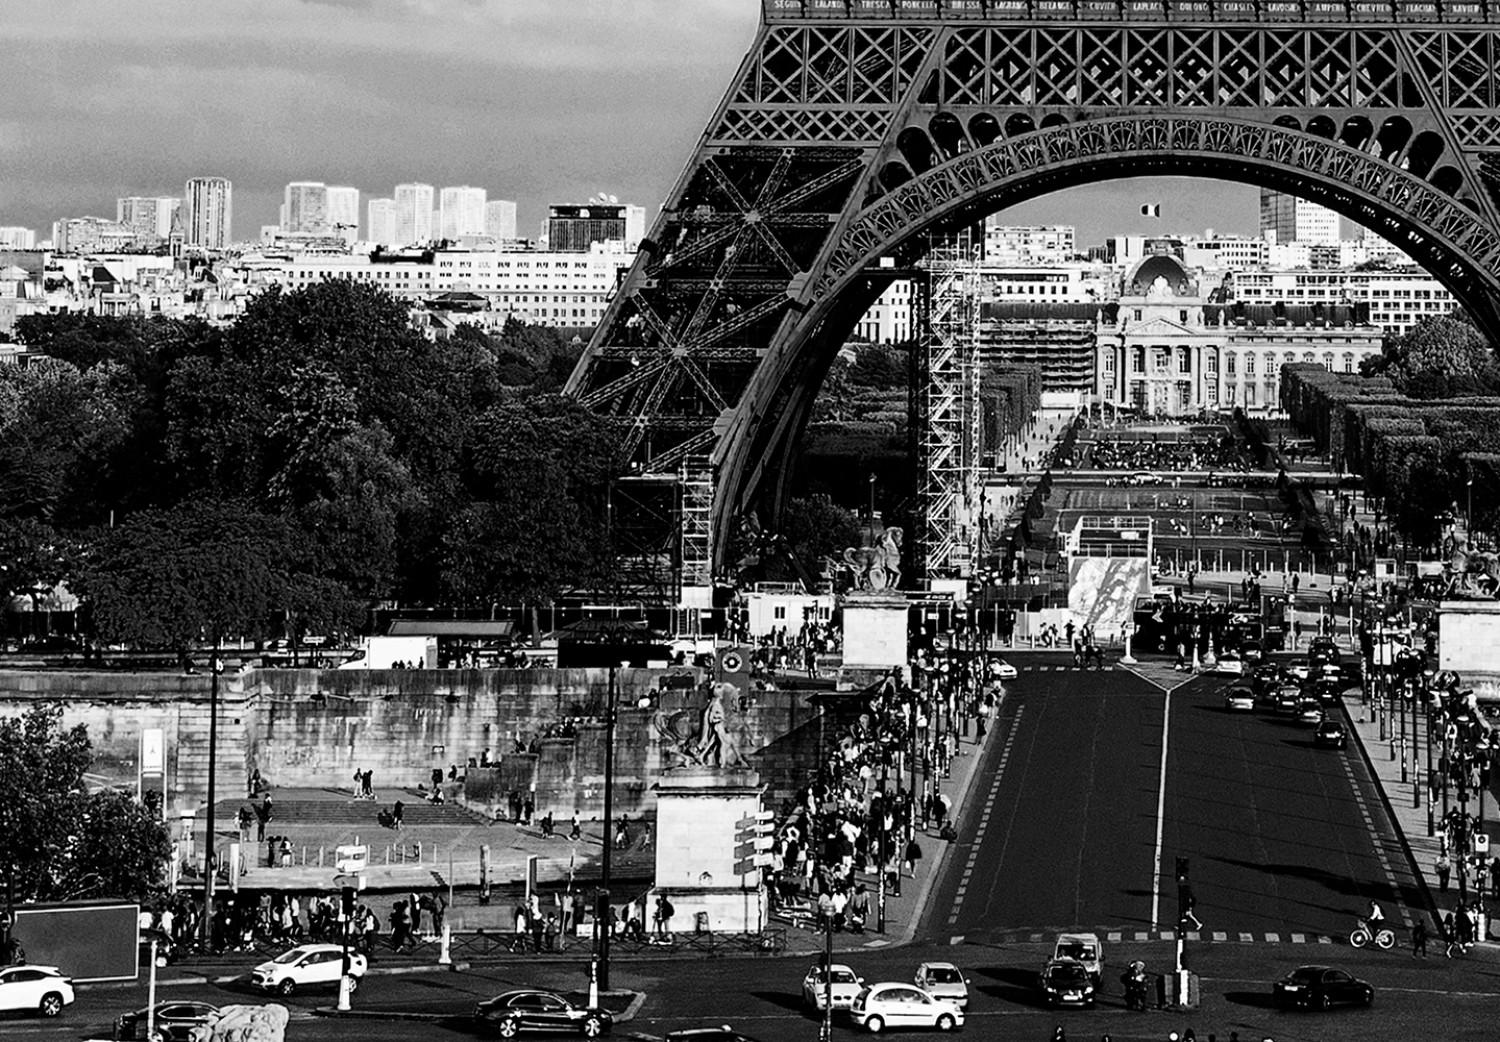 Canvas Black and White Eiffel Tower (1-part) wide - architecture of Paris